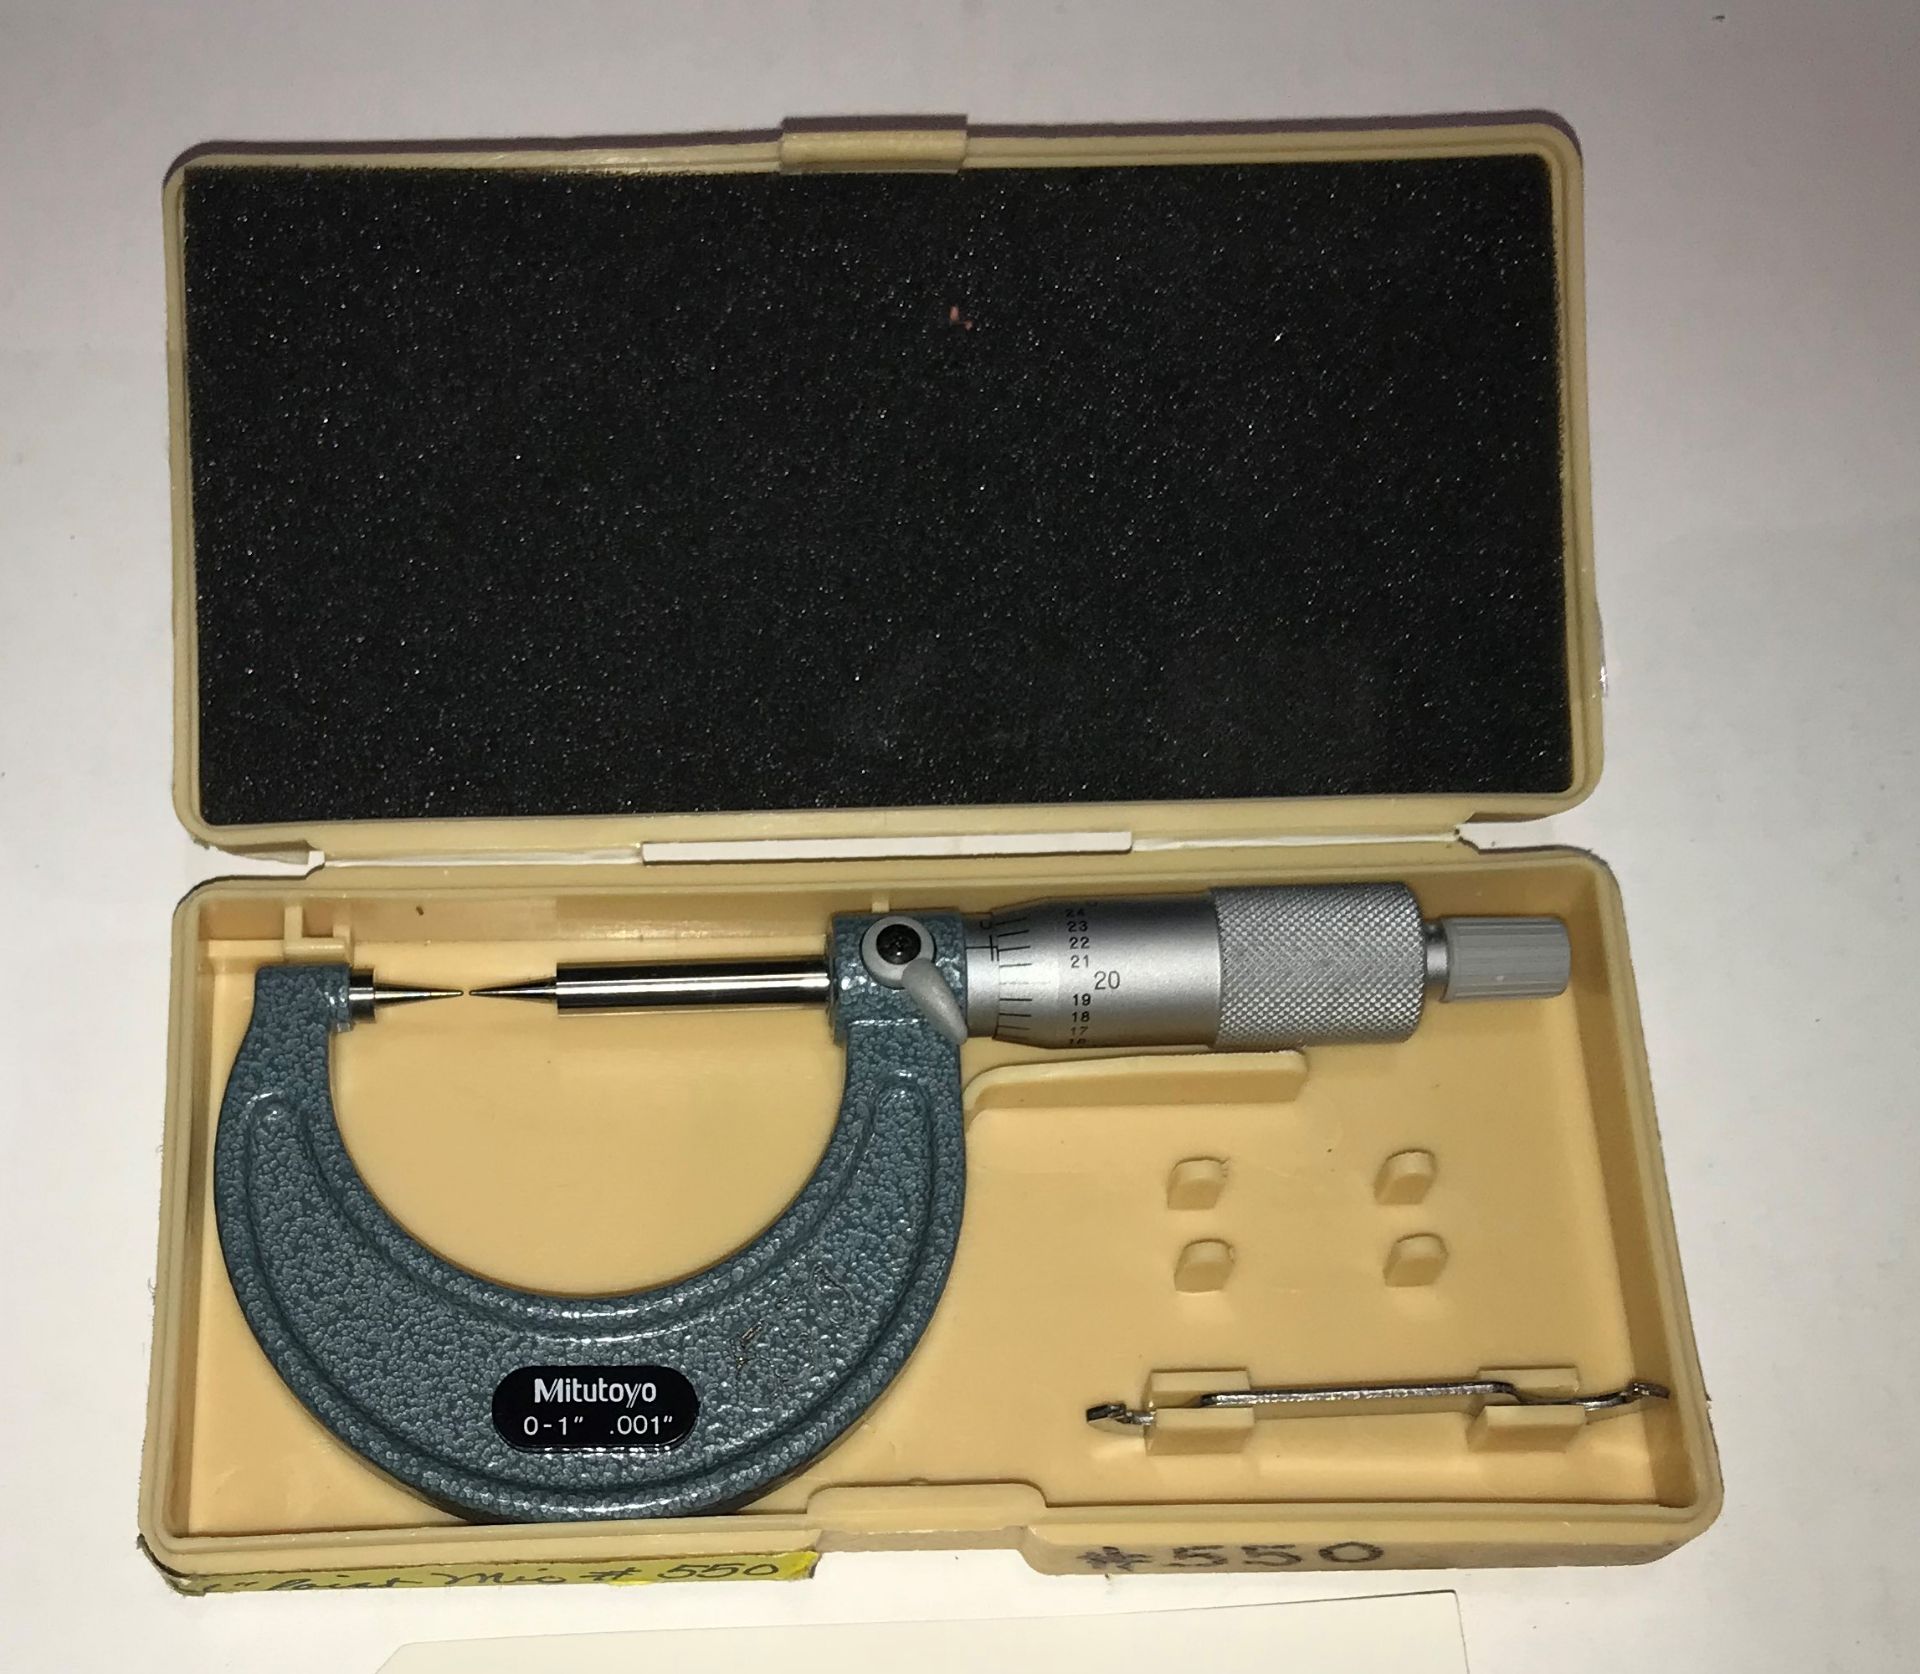 Mitutoyo 0 - 1" Point Micrometer